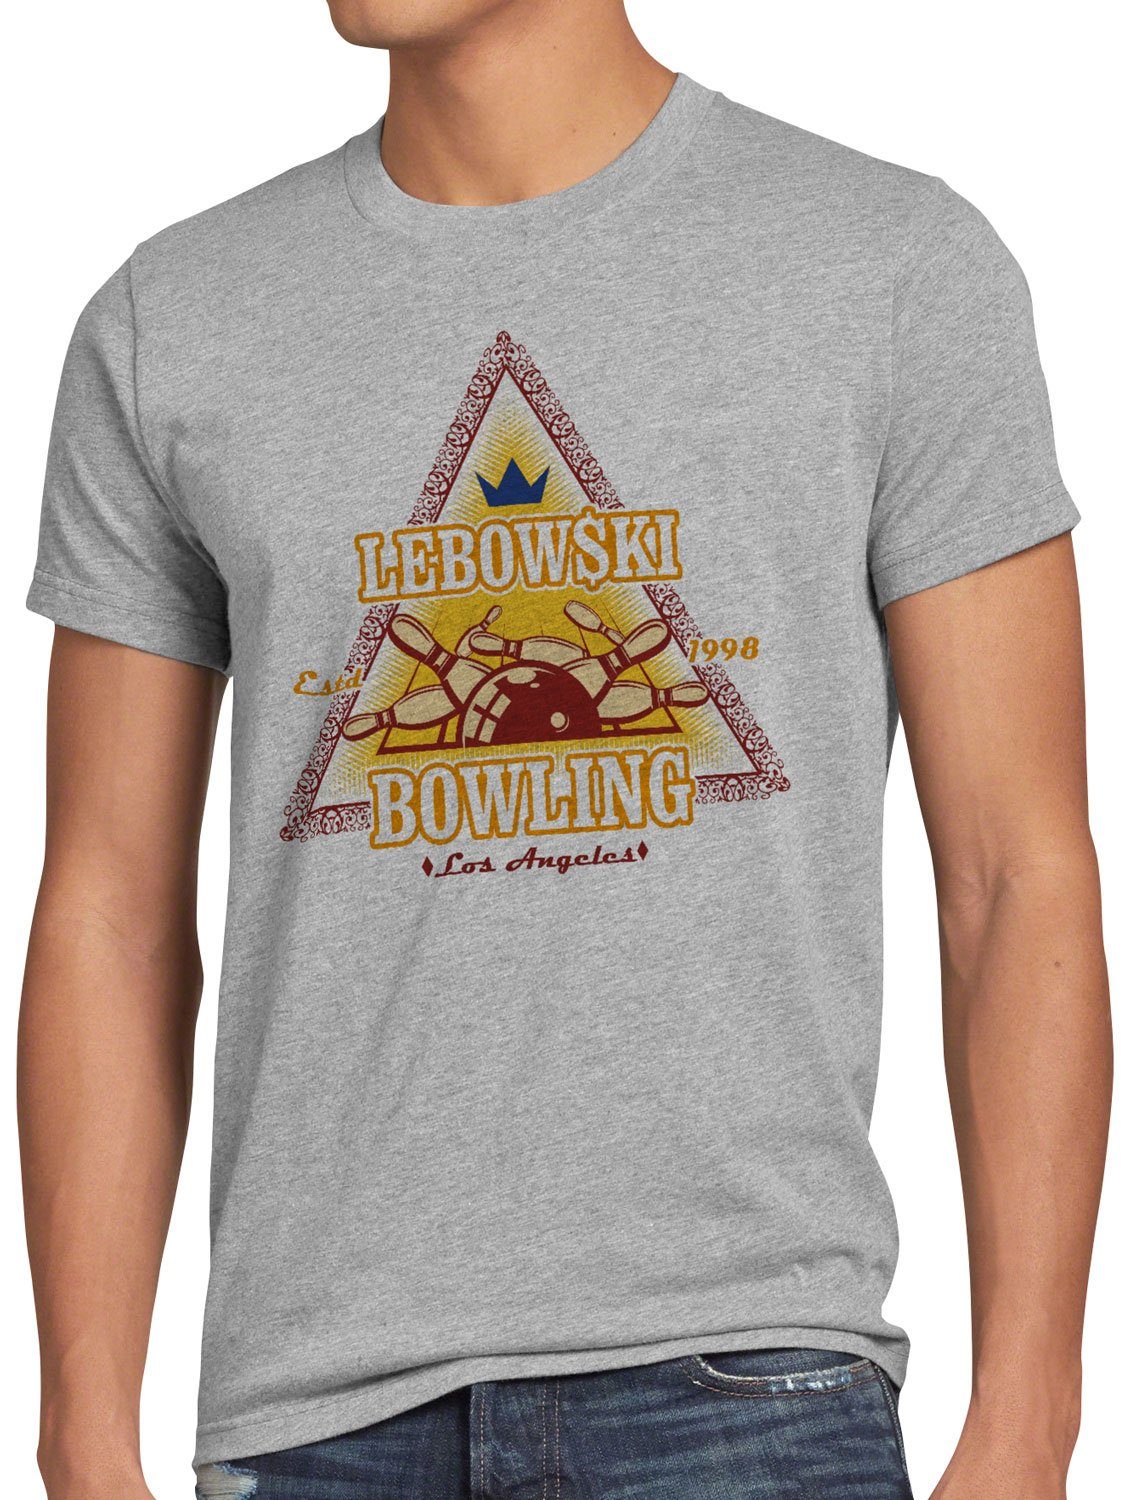 style3 Print-Shirt Herren T-Shirt Lebowski Rude Bowler meliert grau Big Dude Bowling